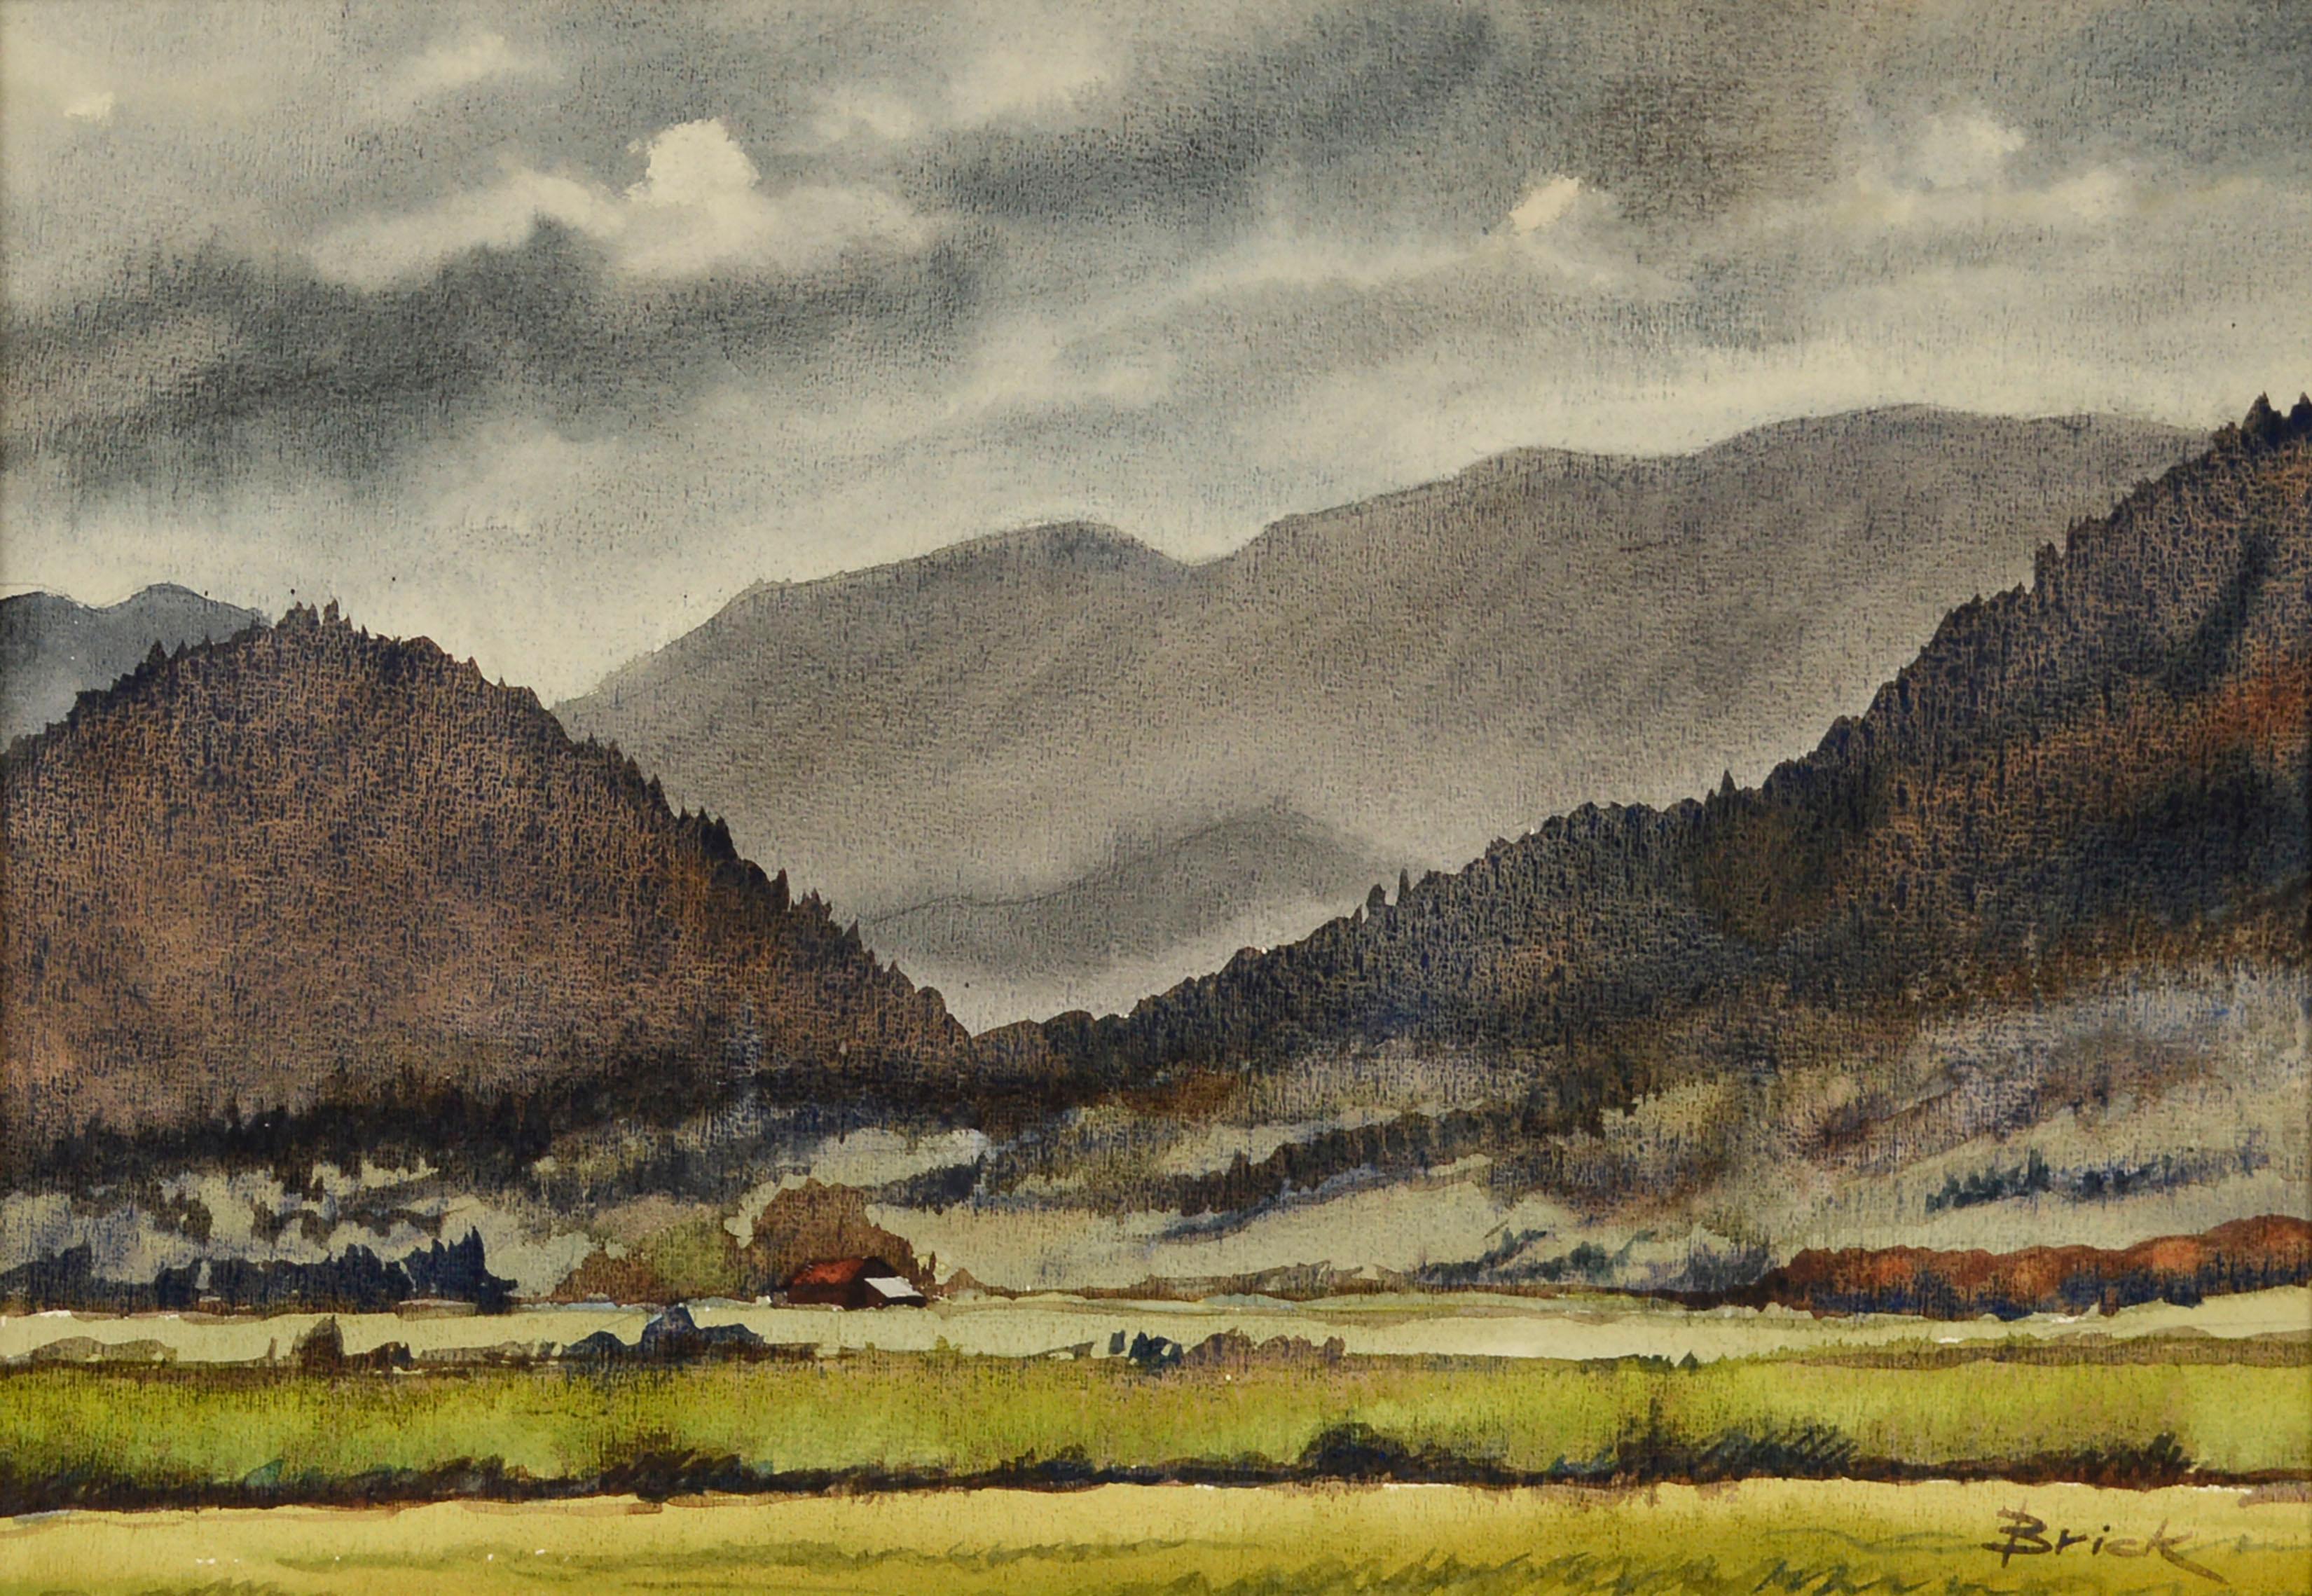 Walter Jim Brick Landscape Art - Willamette Valley View, Pacific Northwest Landscape Watercolor 